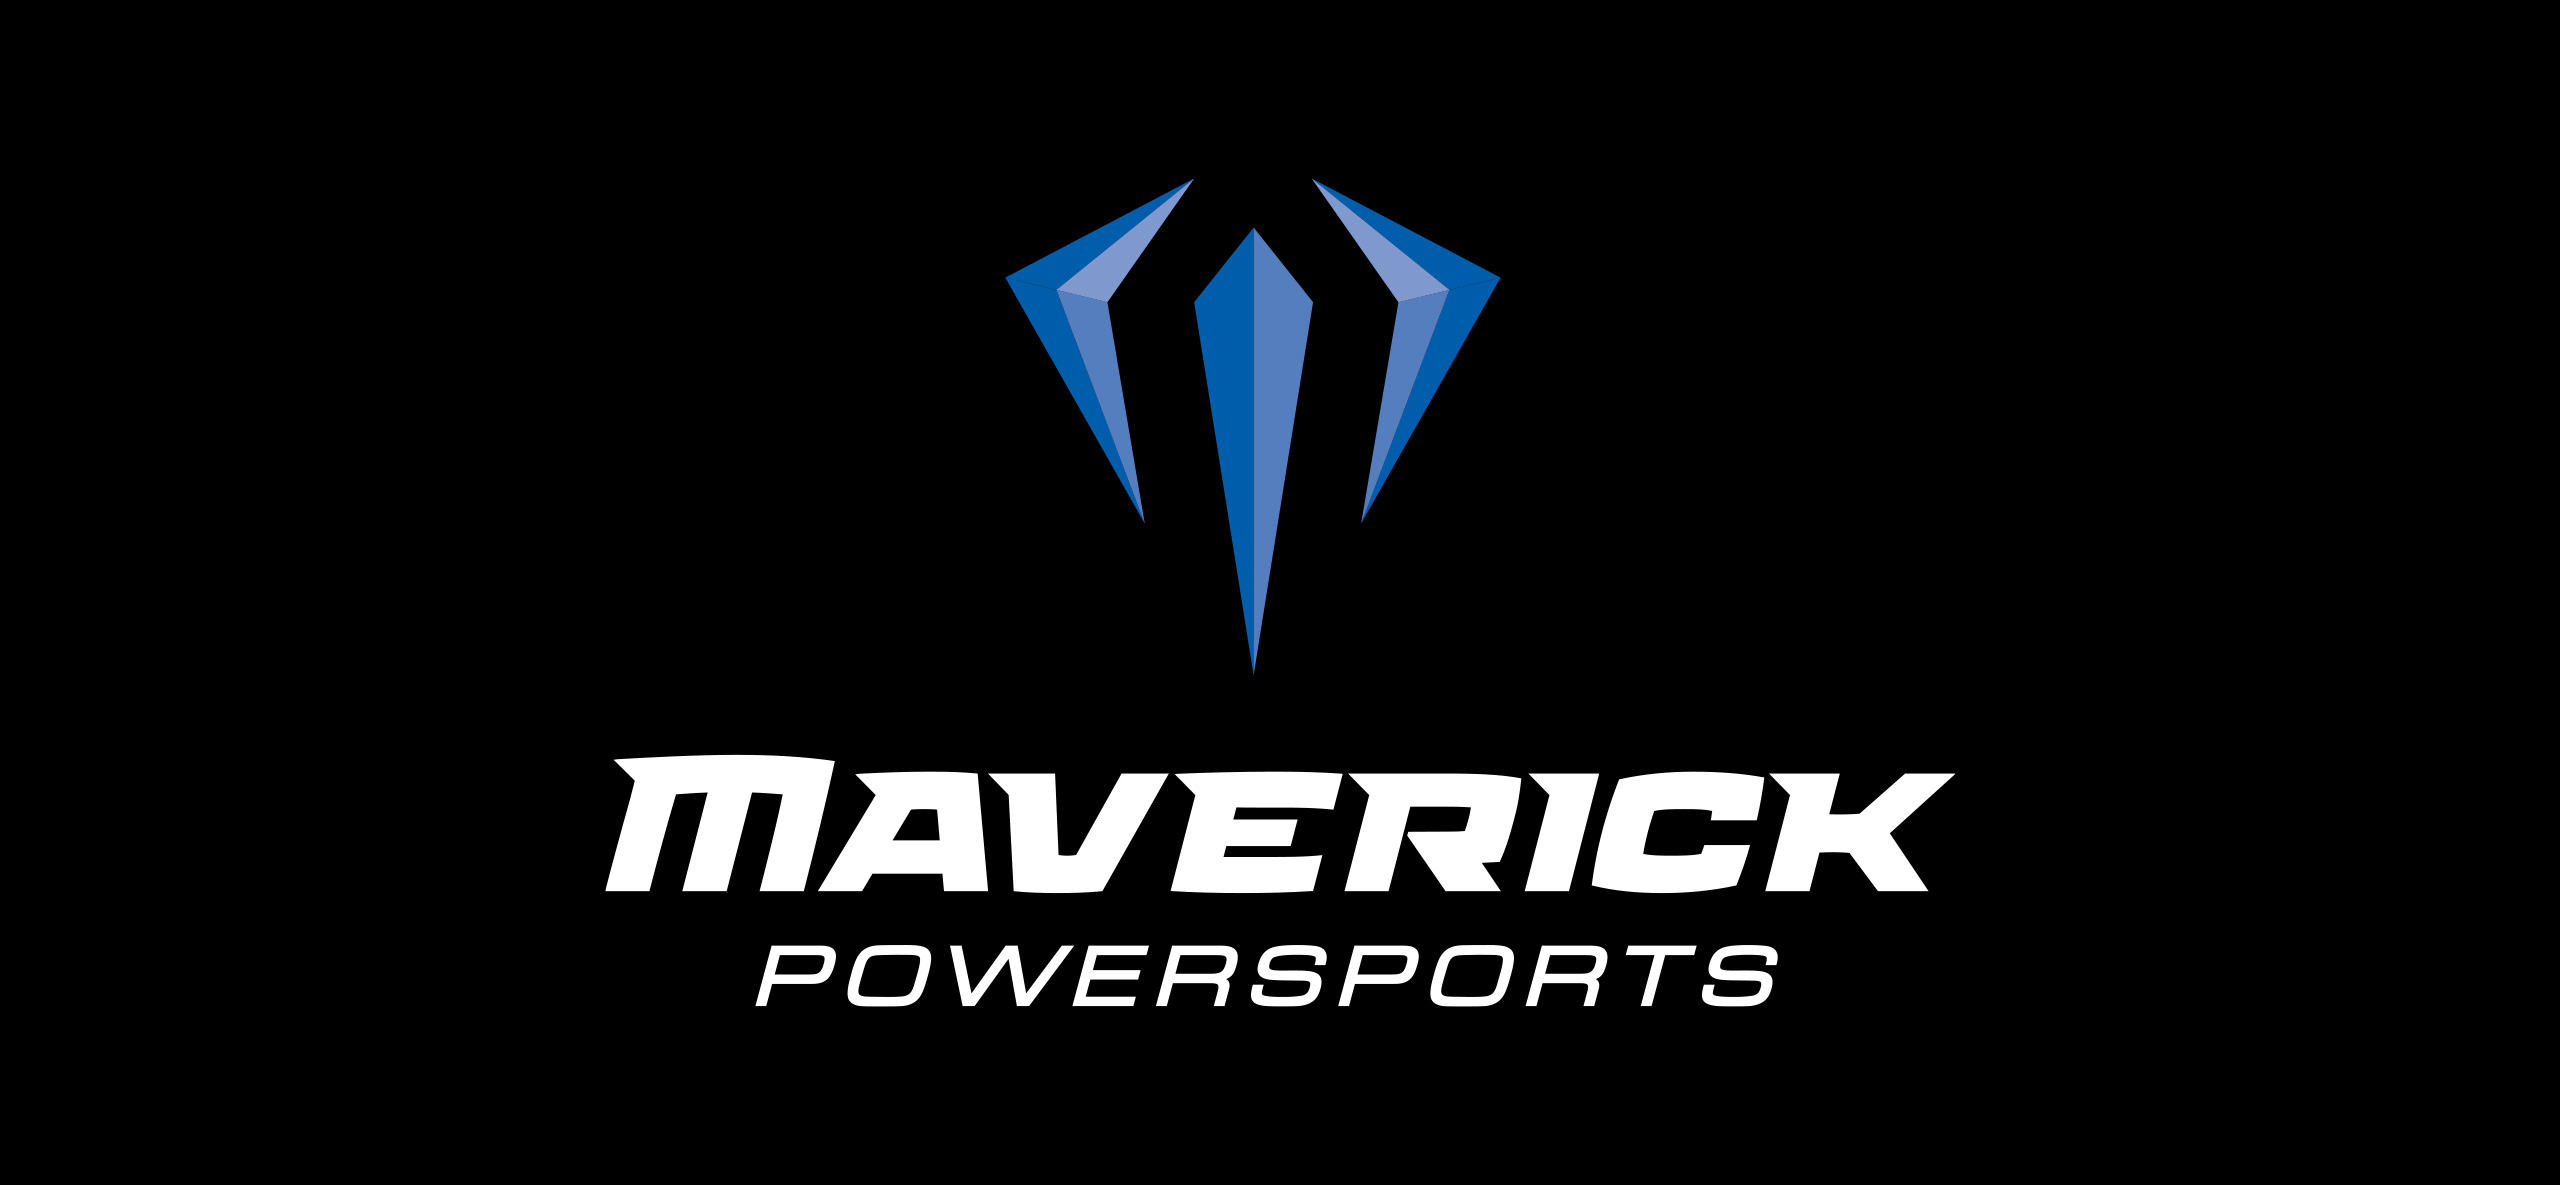 Maverick Powersports logo